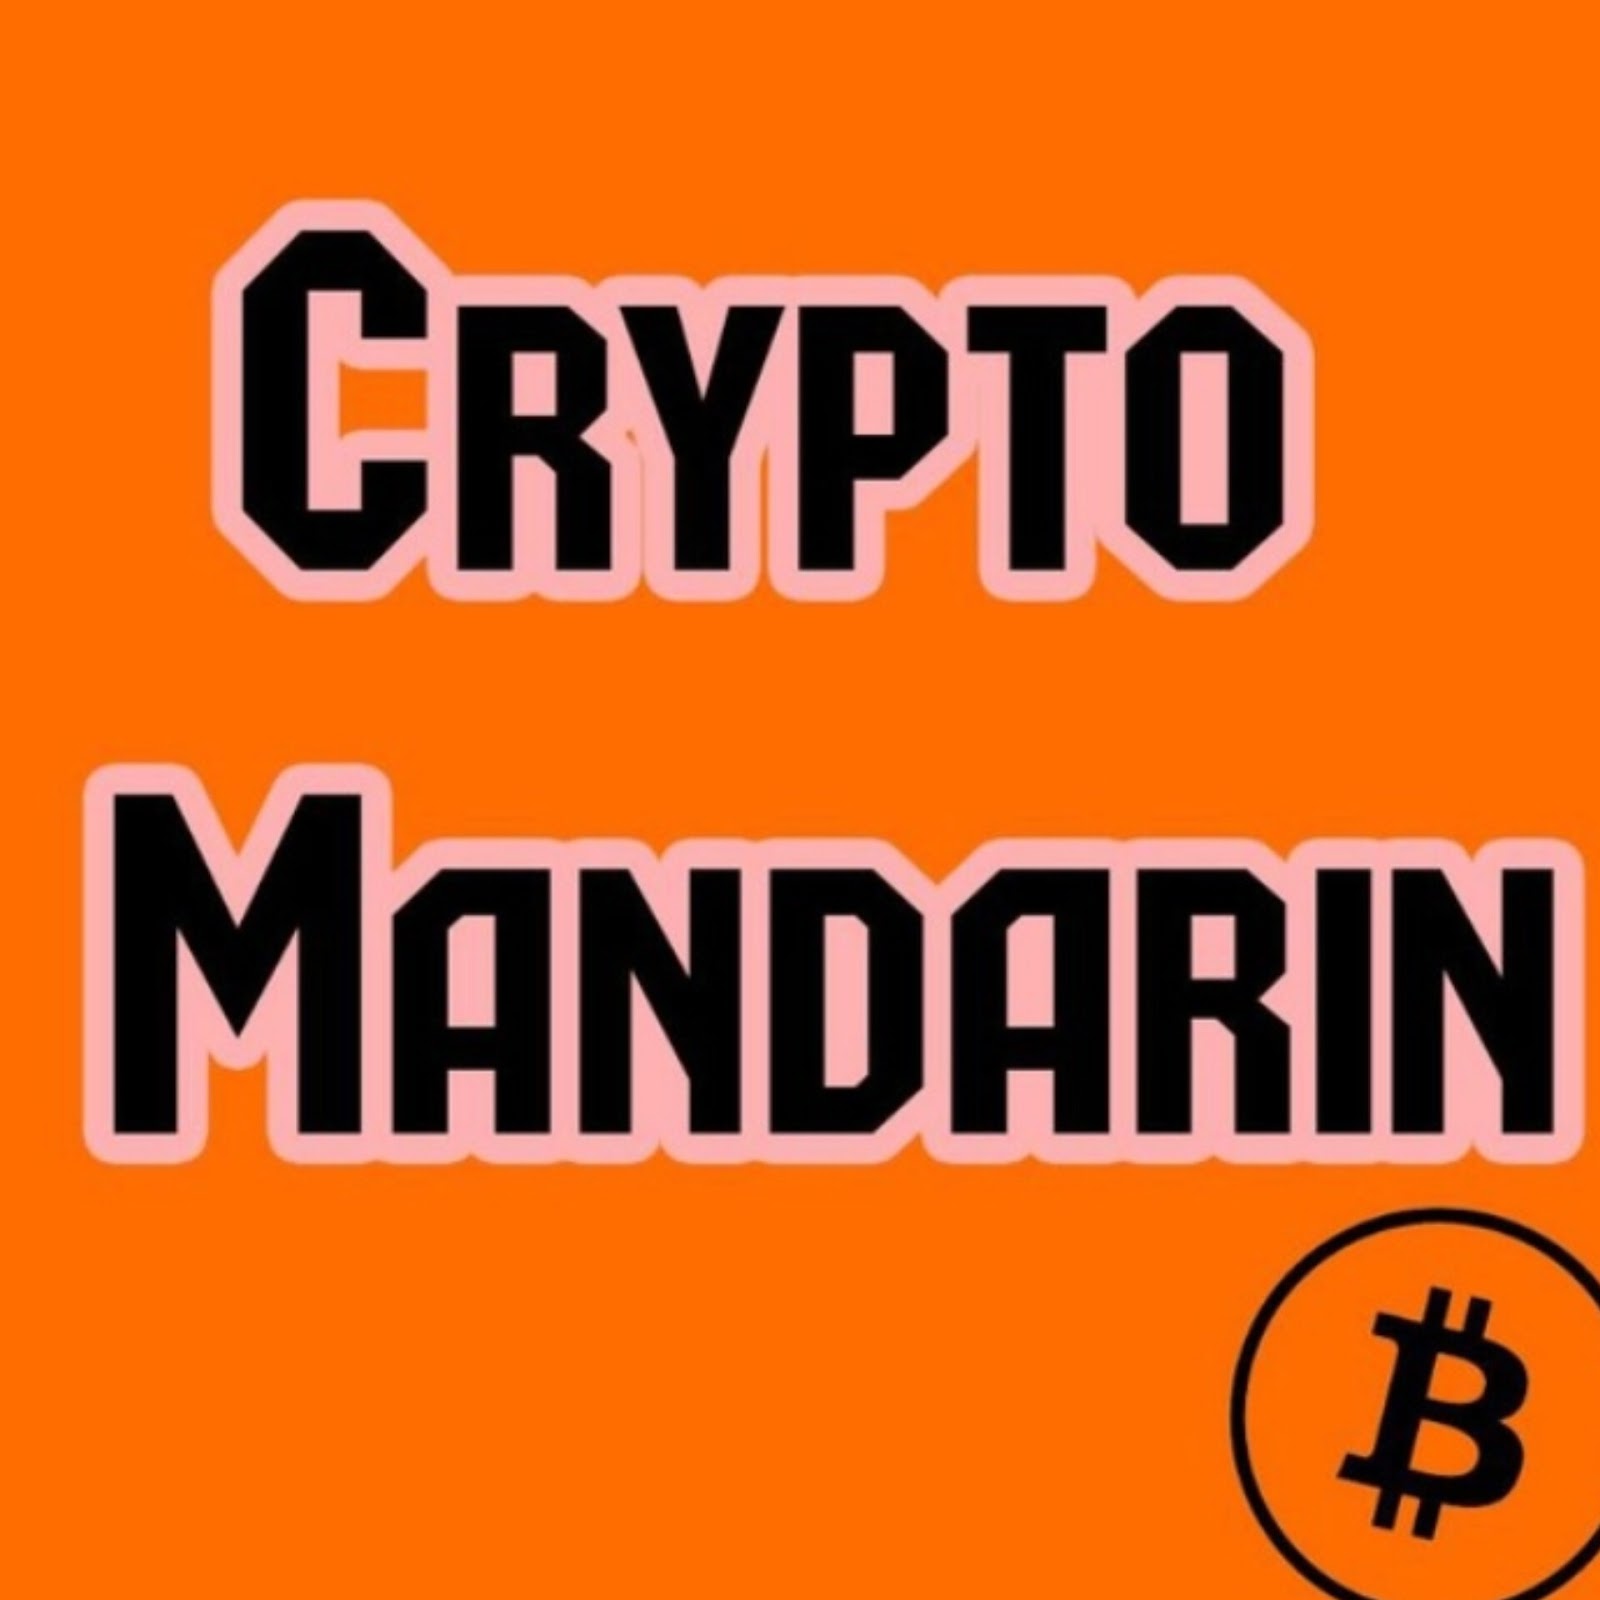 Crypto Mandarin the Signals